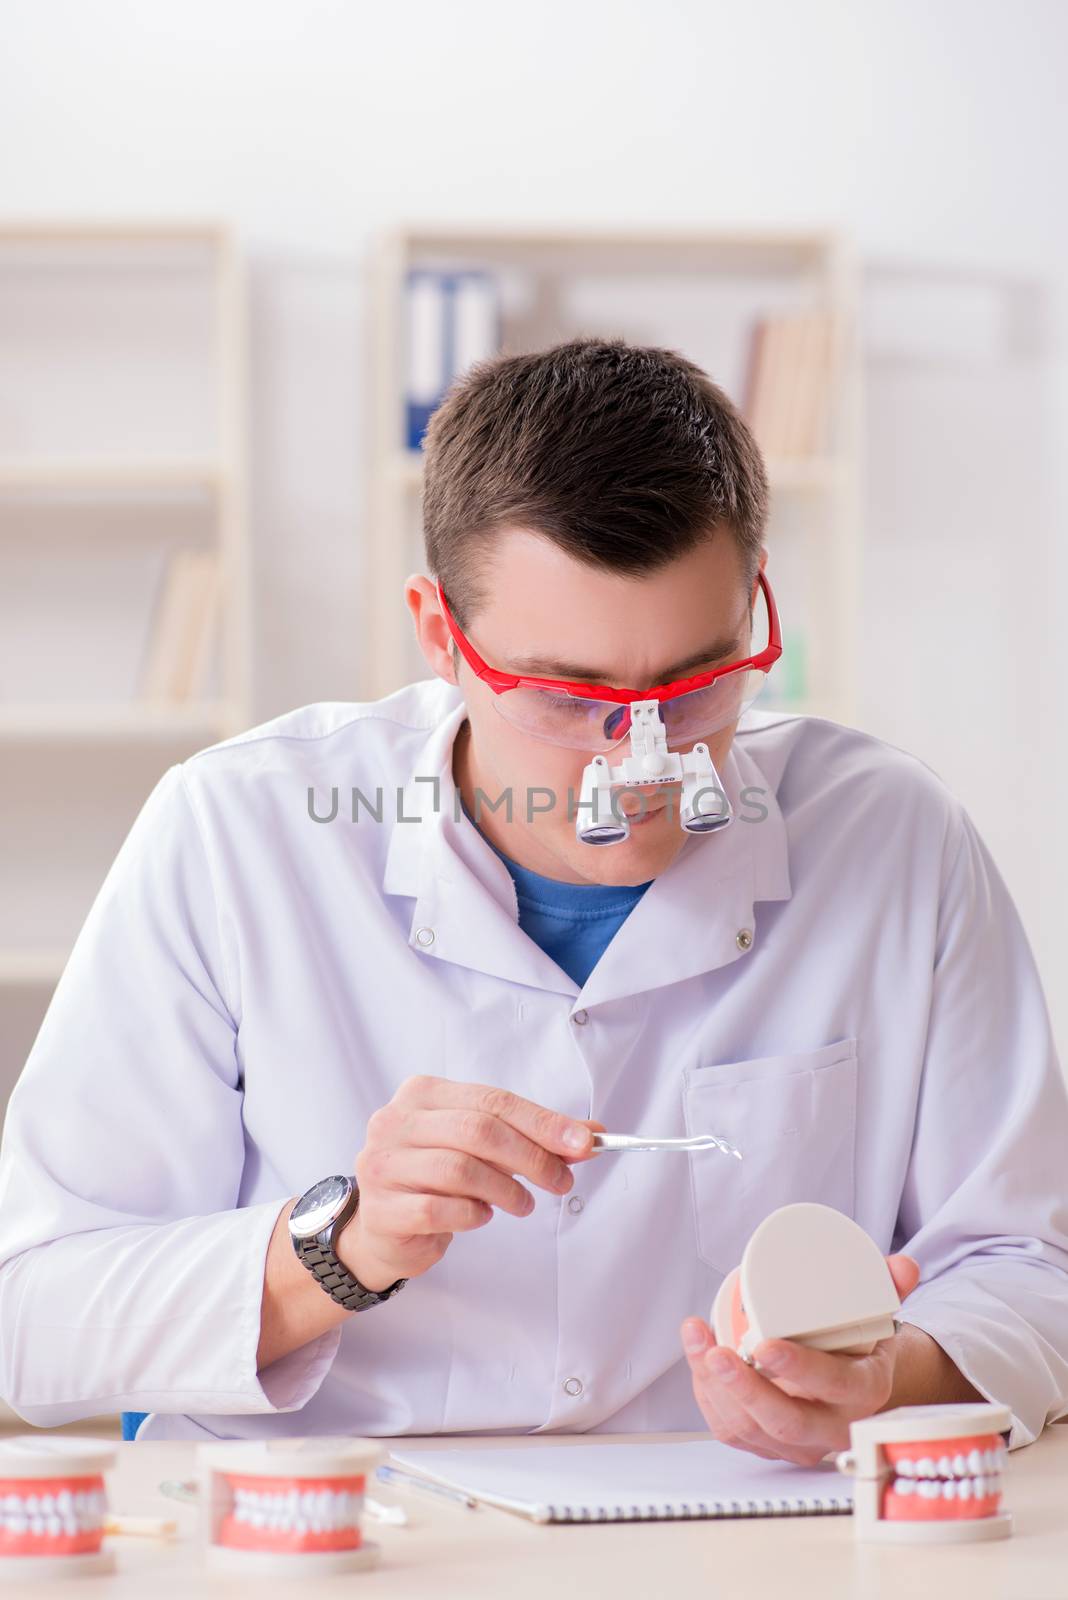 Dentist working teeth implant in medical lab